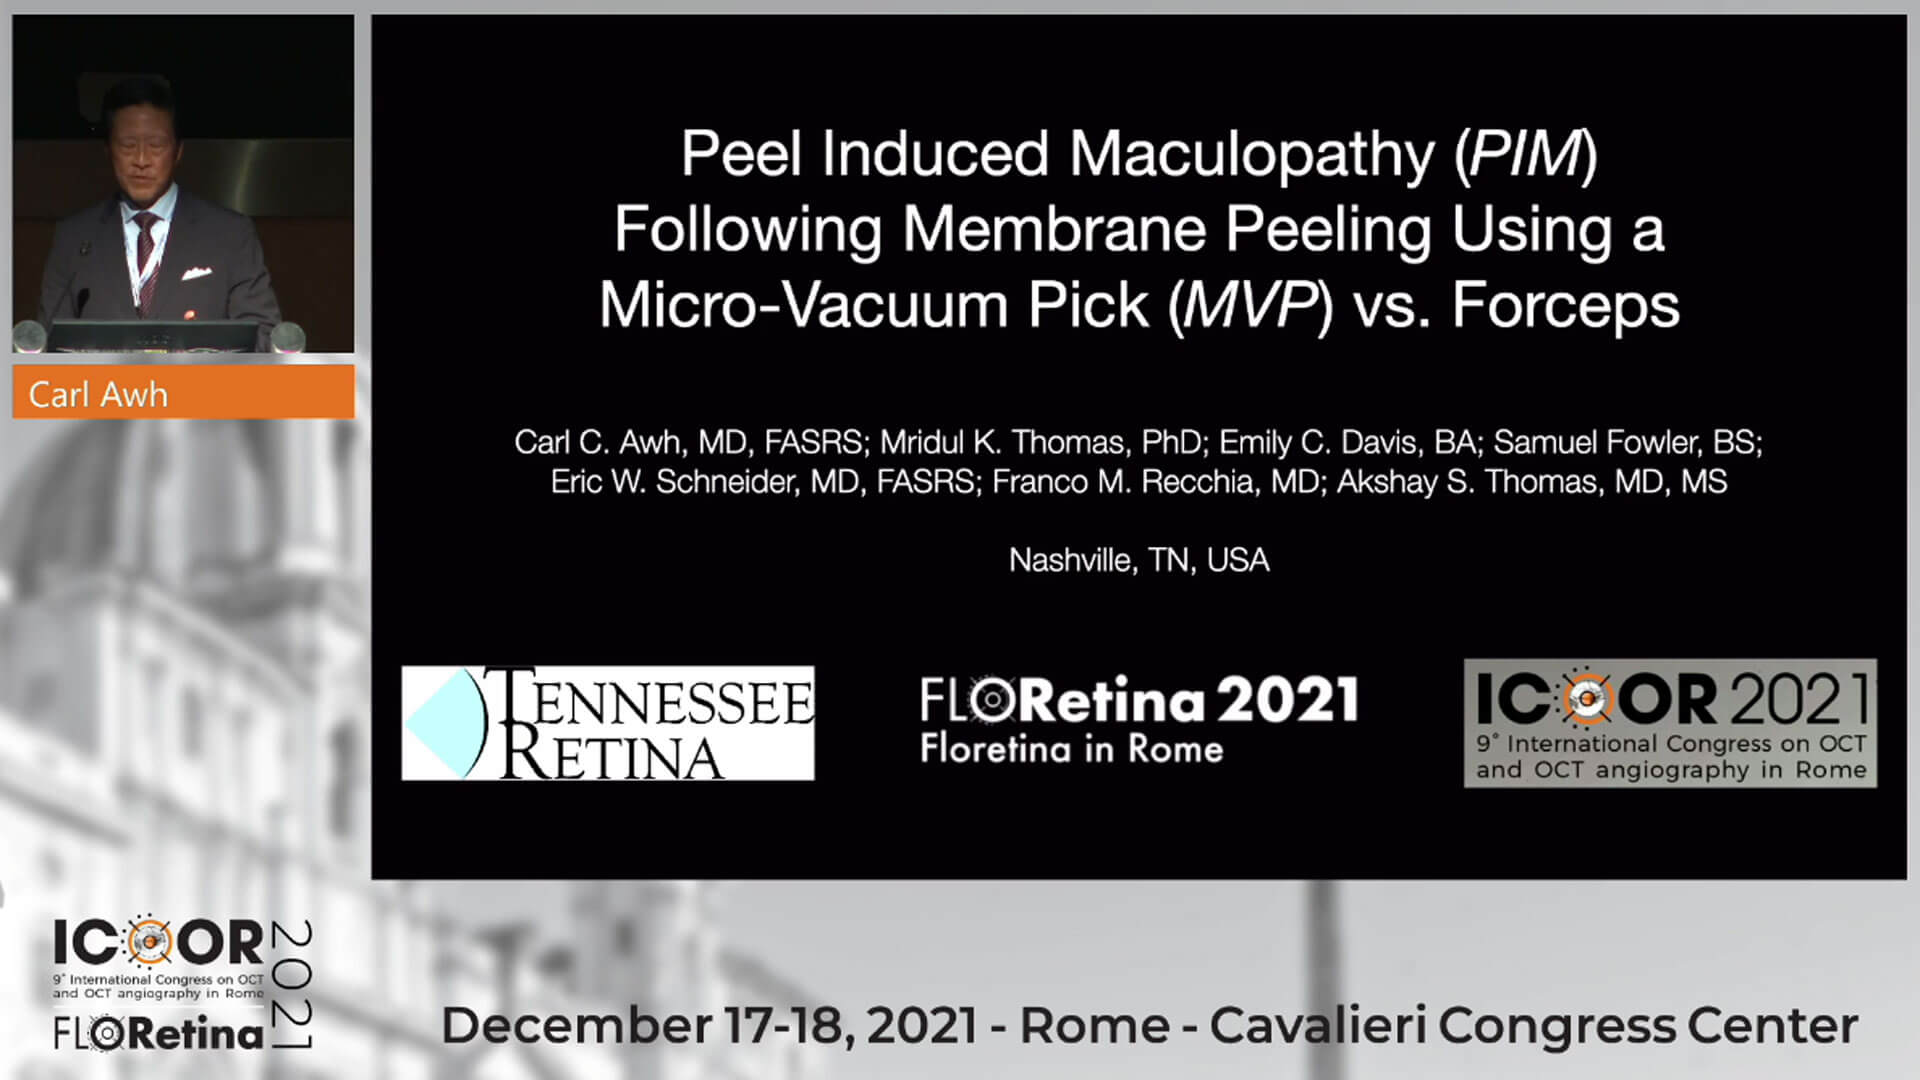 Peel Induced Maculopathy Following Membrane Peeling Using a Micro-Vacuum Pick vs. Forceps